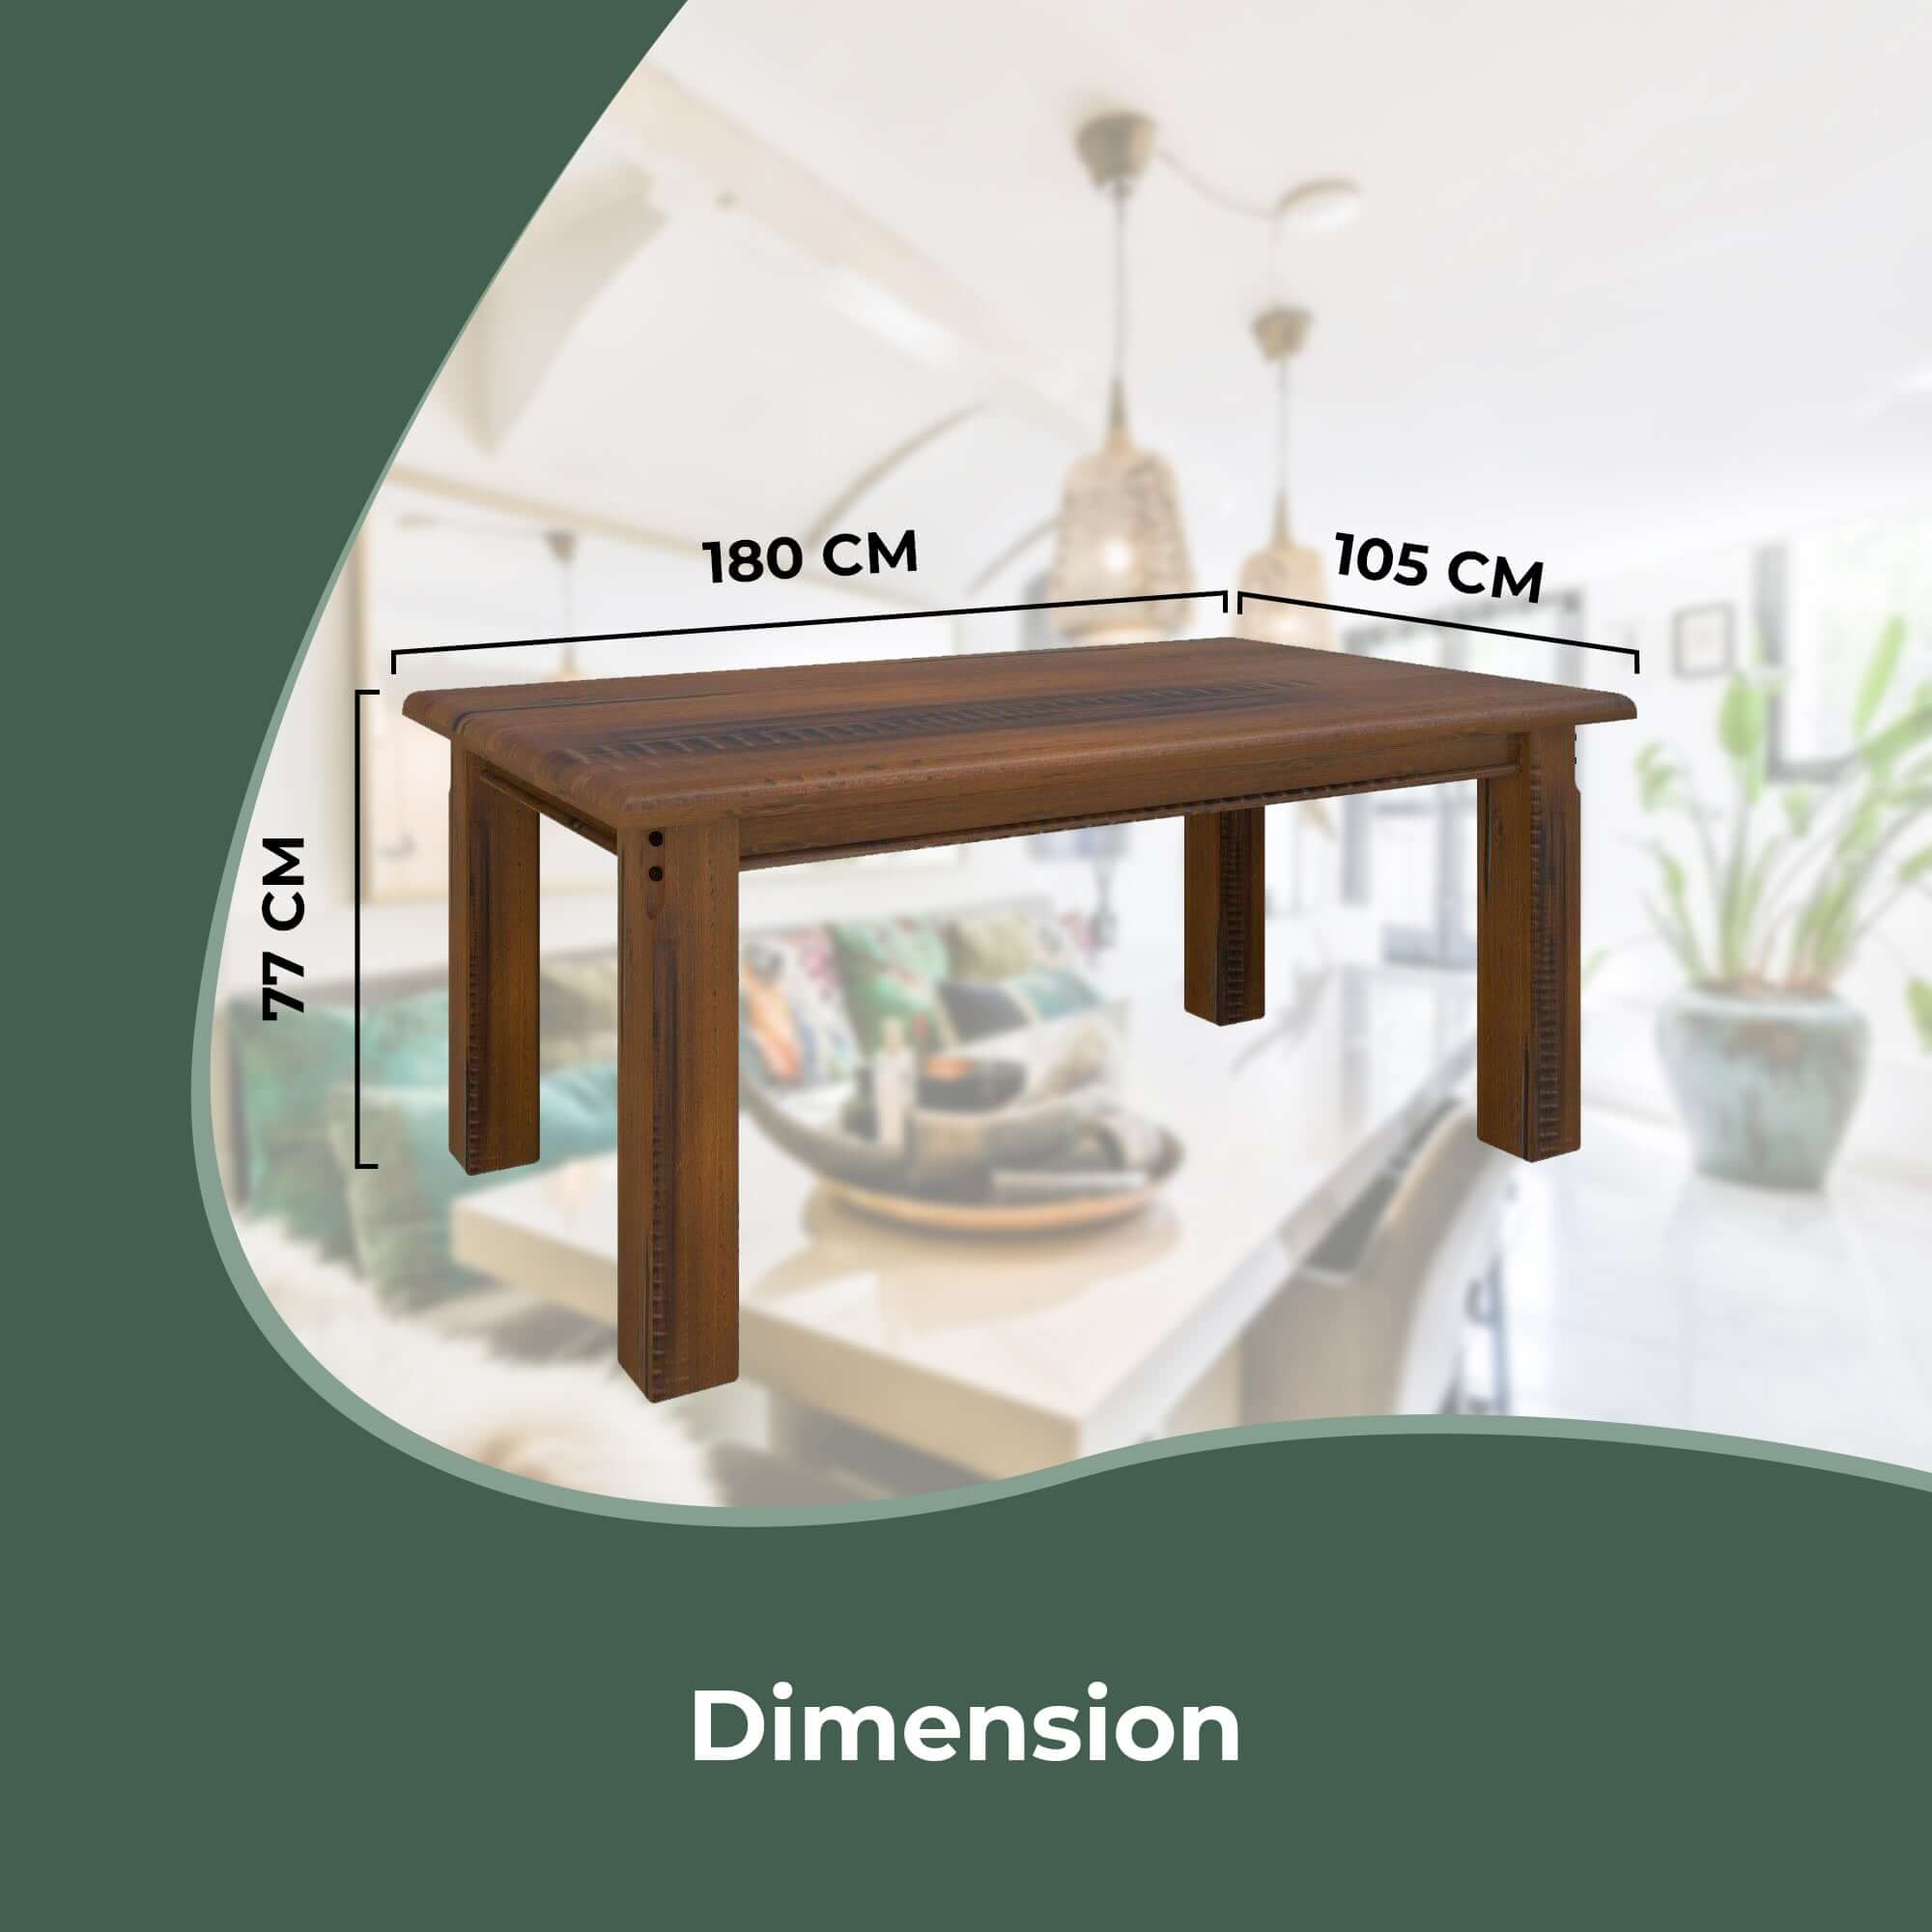 Umber Dining Table 180cm Solid Pine Wood Home Dinner Furniture - Dark Brown-Upinteriors